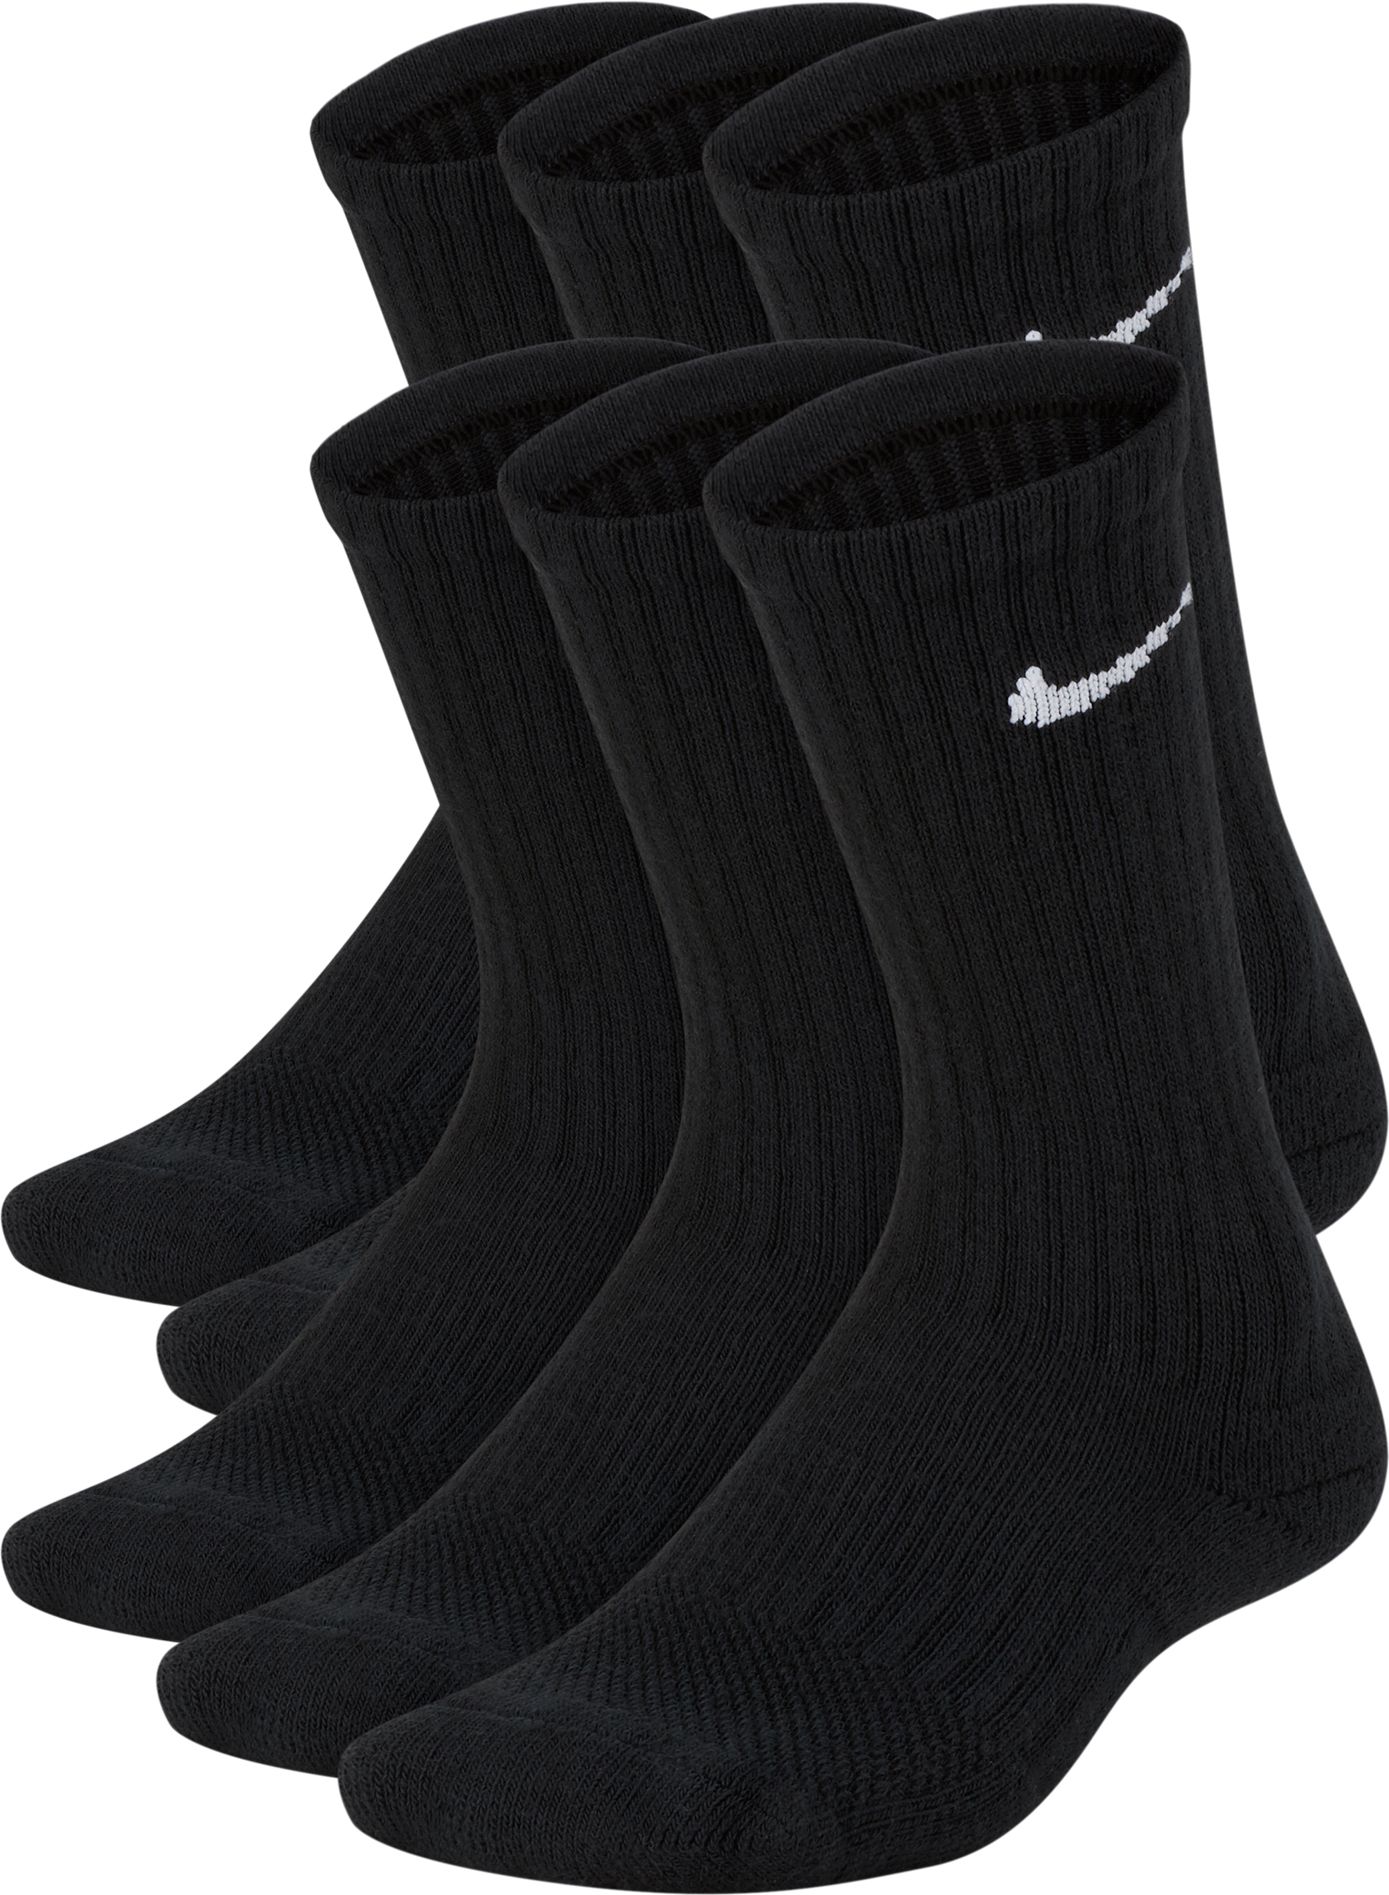 long nike socks black